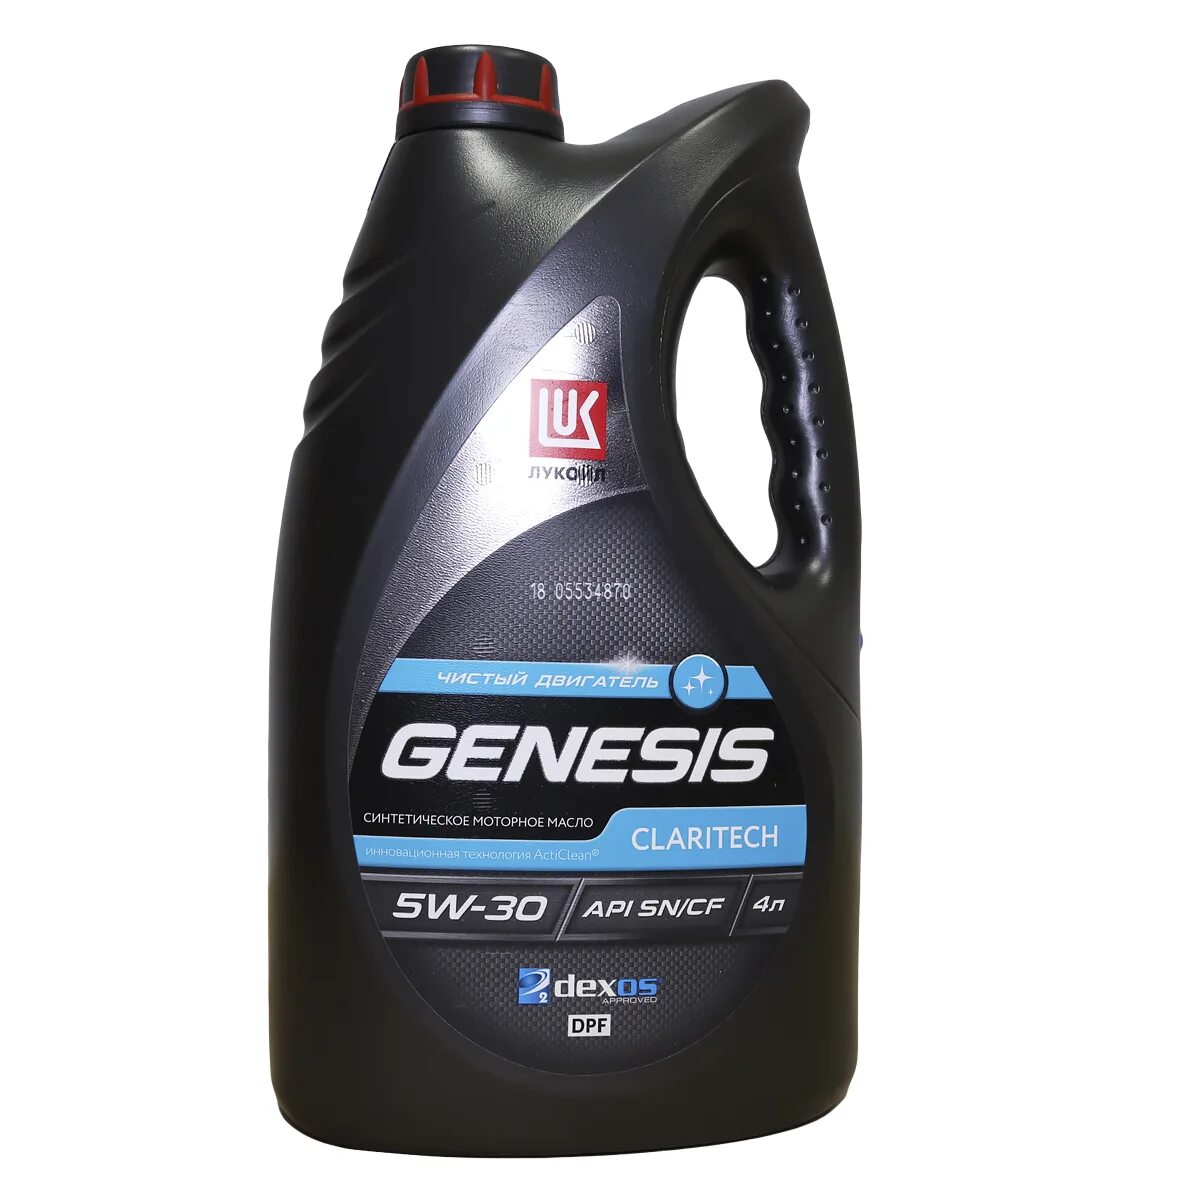 Масло лукойл нк. Lukoil Genesis 5w30. Lukoil Genesis Claritech 5w-30. Genesis Armortech 5w-30. Lukoil Genesis 5w30 Genesis.